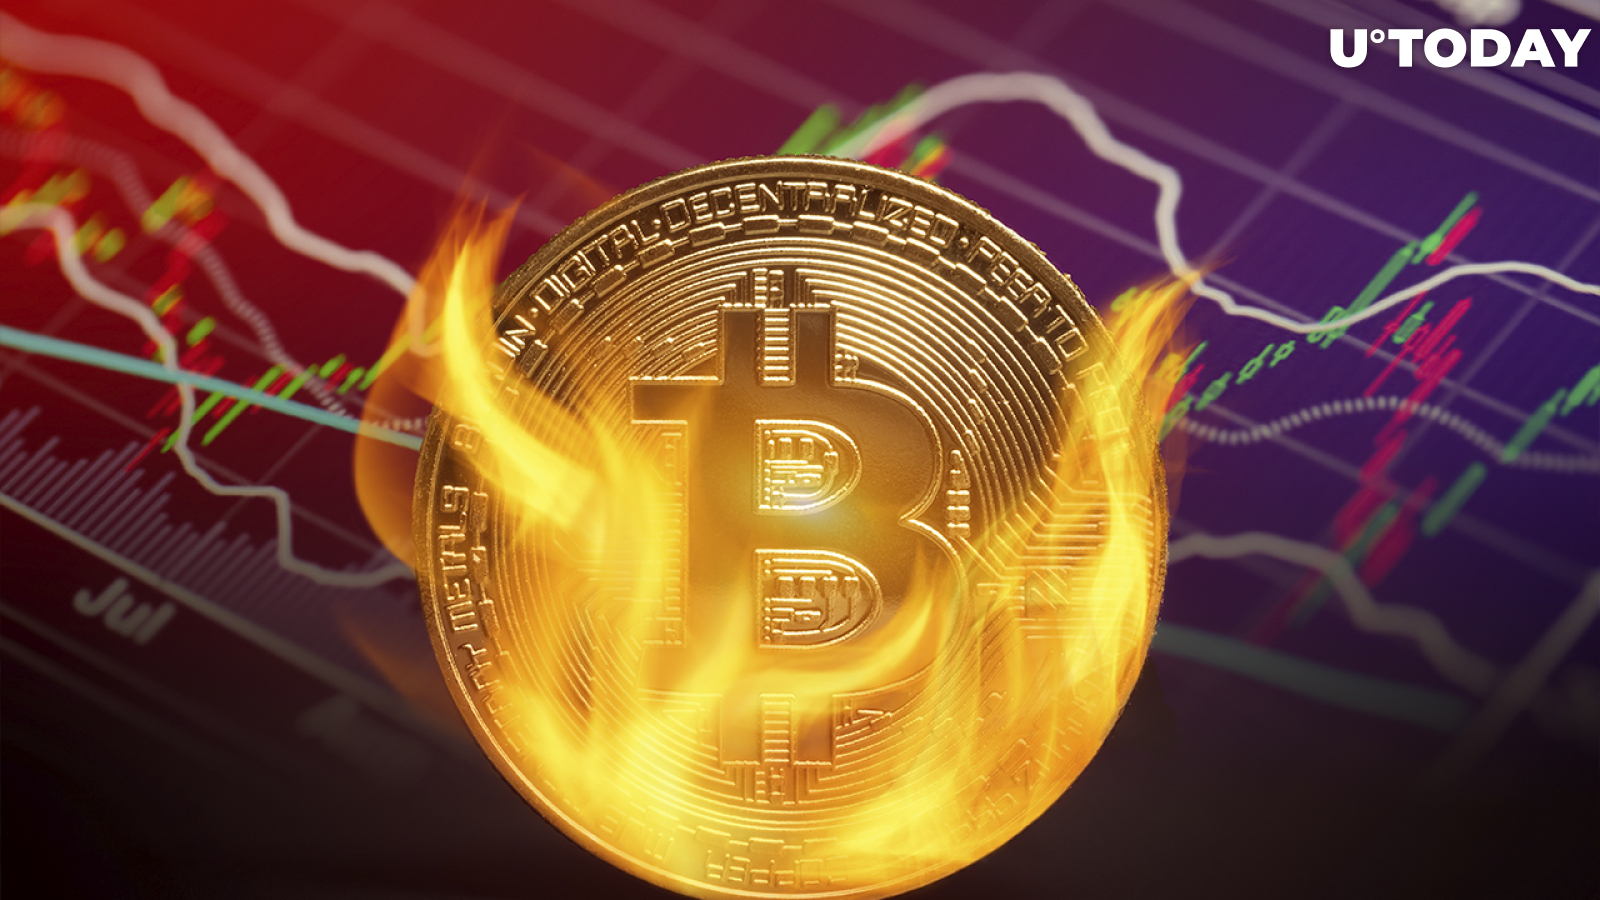 3 Reasons for Bitcoin's Drop Below $40,000